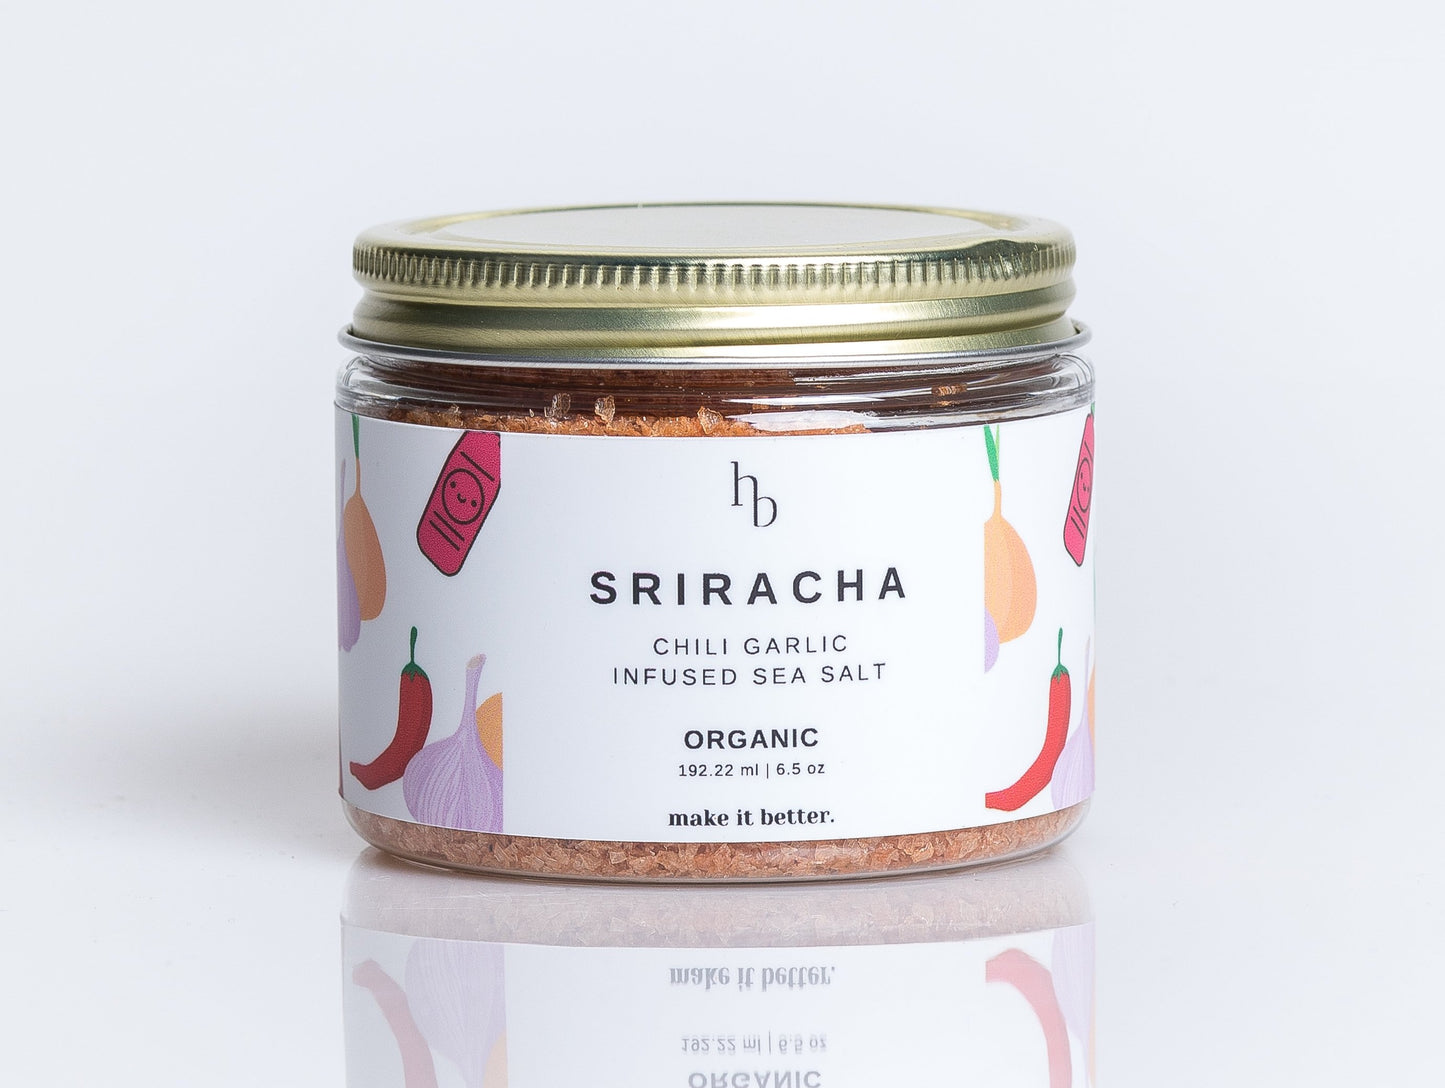 Sriracha Sea Salt